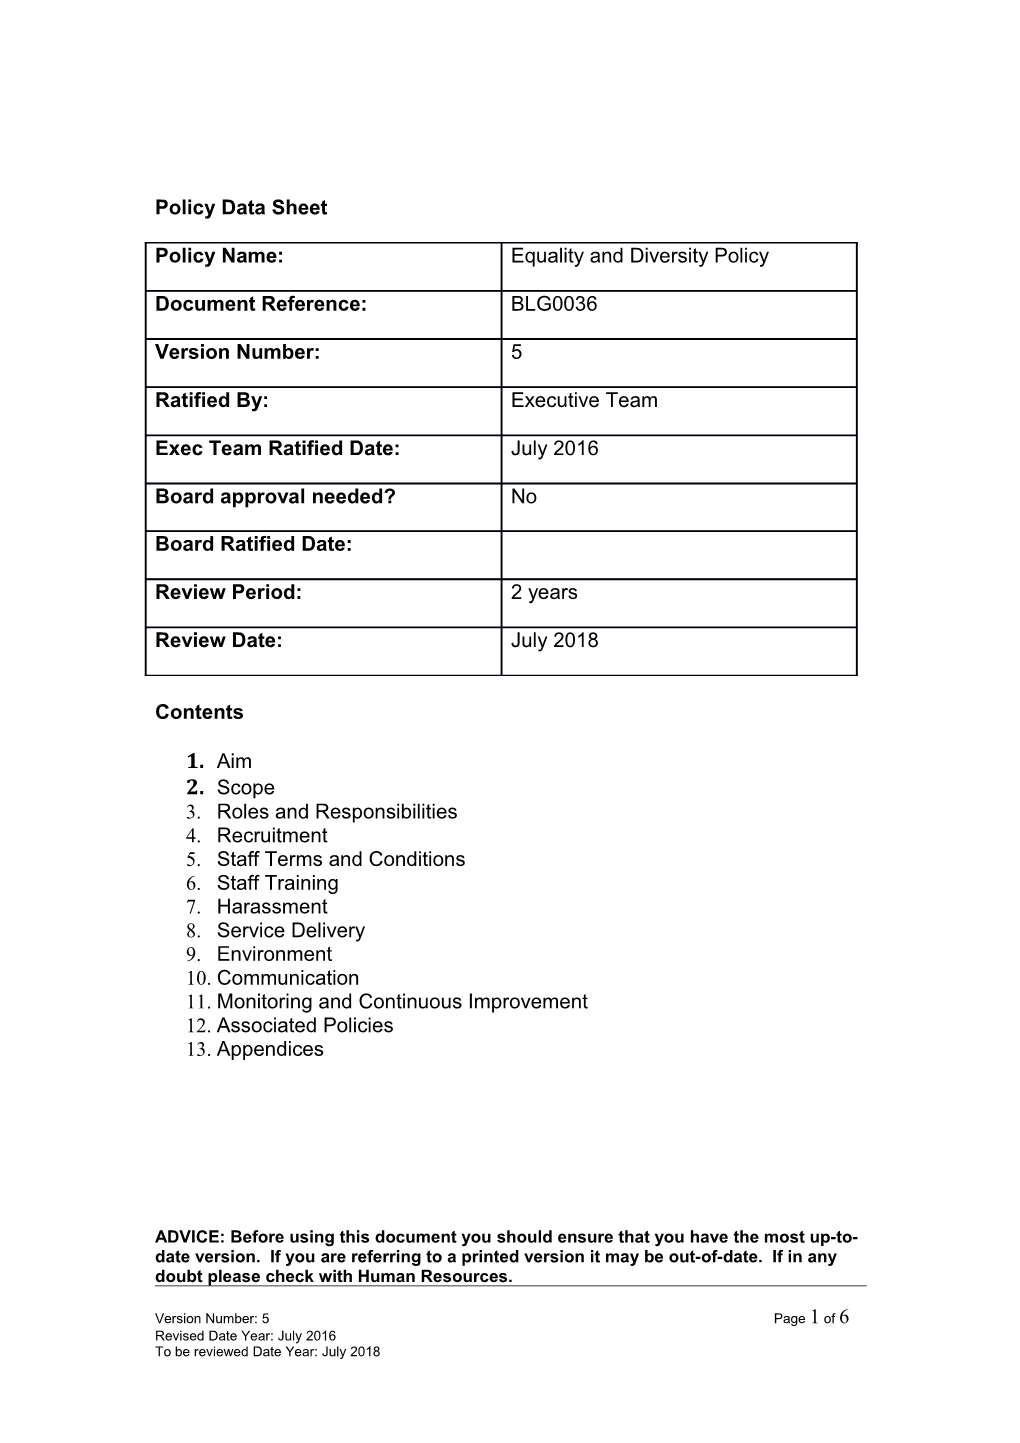 Policy Data Sheet